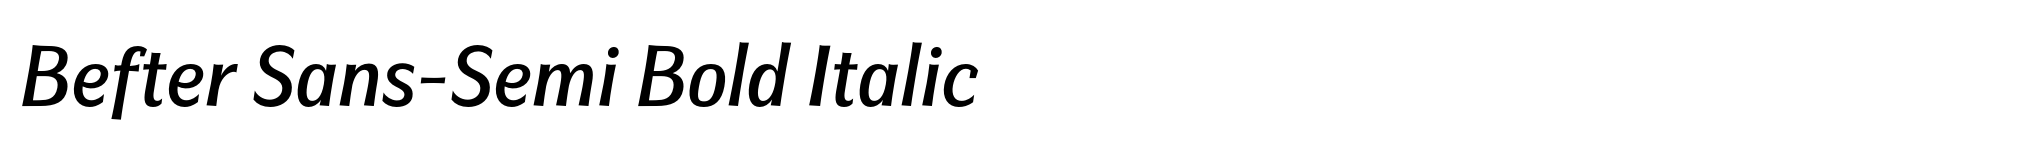 Befter Sans-Semi Bold Italic image